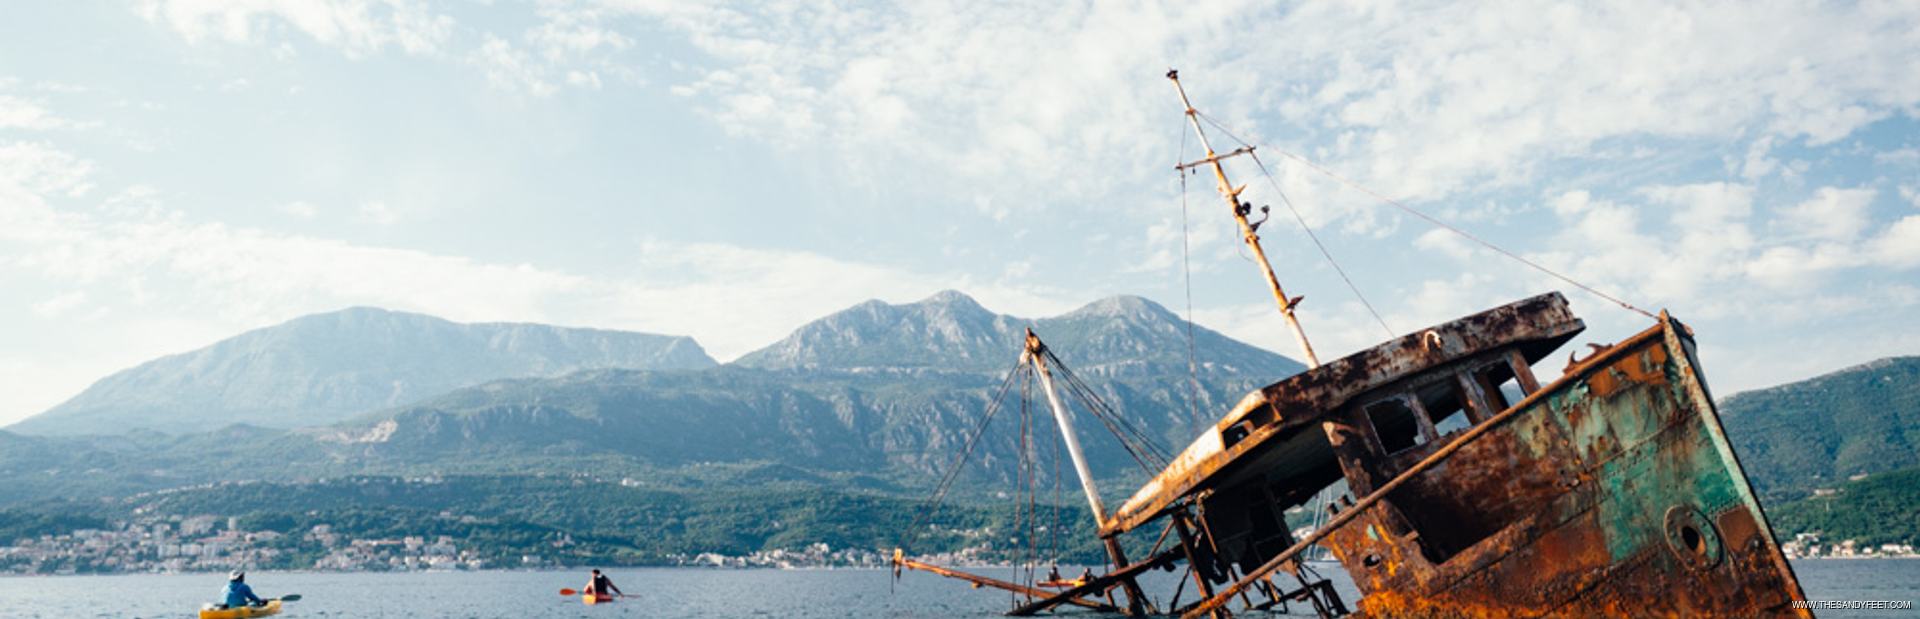 Herceg Novi Shipwreck Image 1